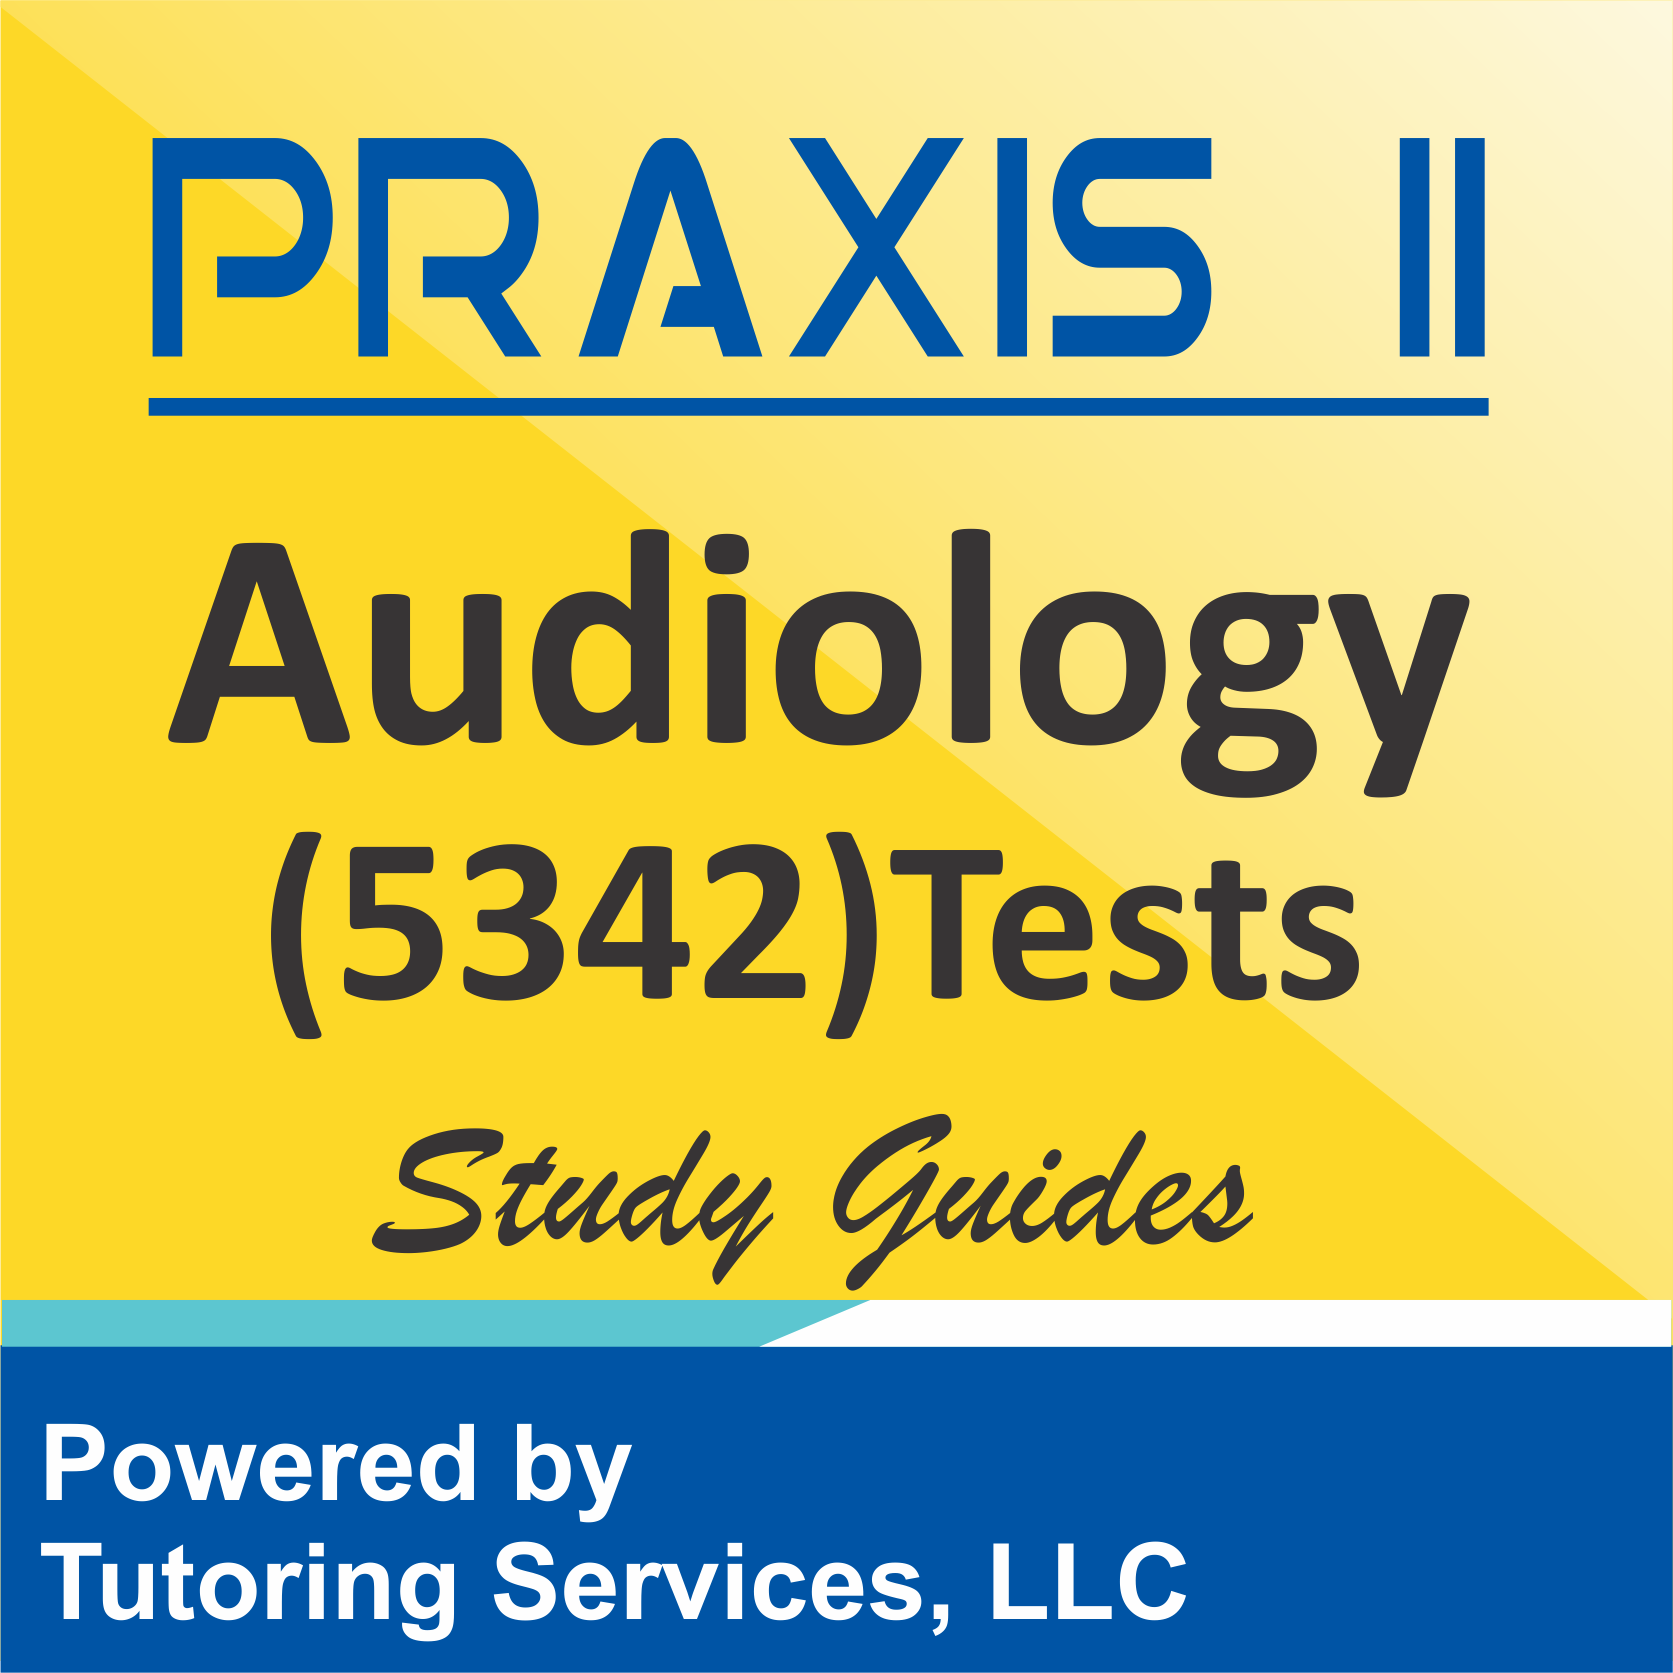 Praxis II Audiology (5342) Examination Information